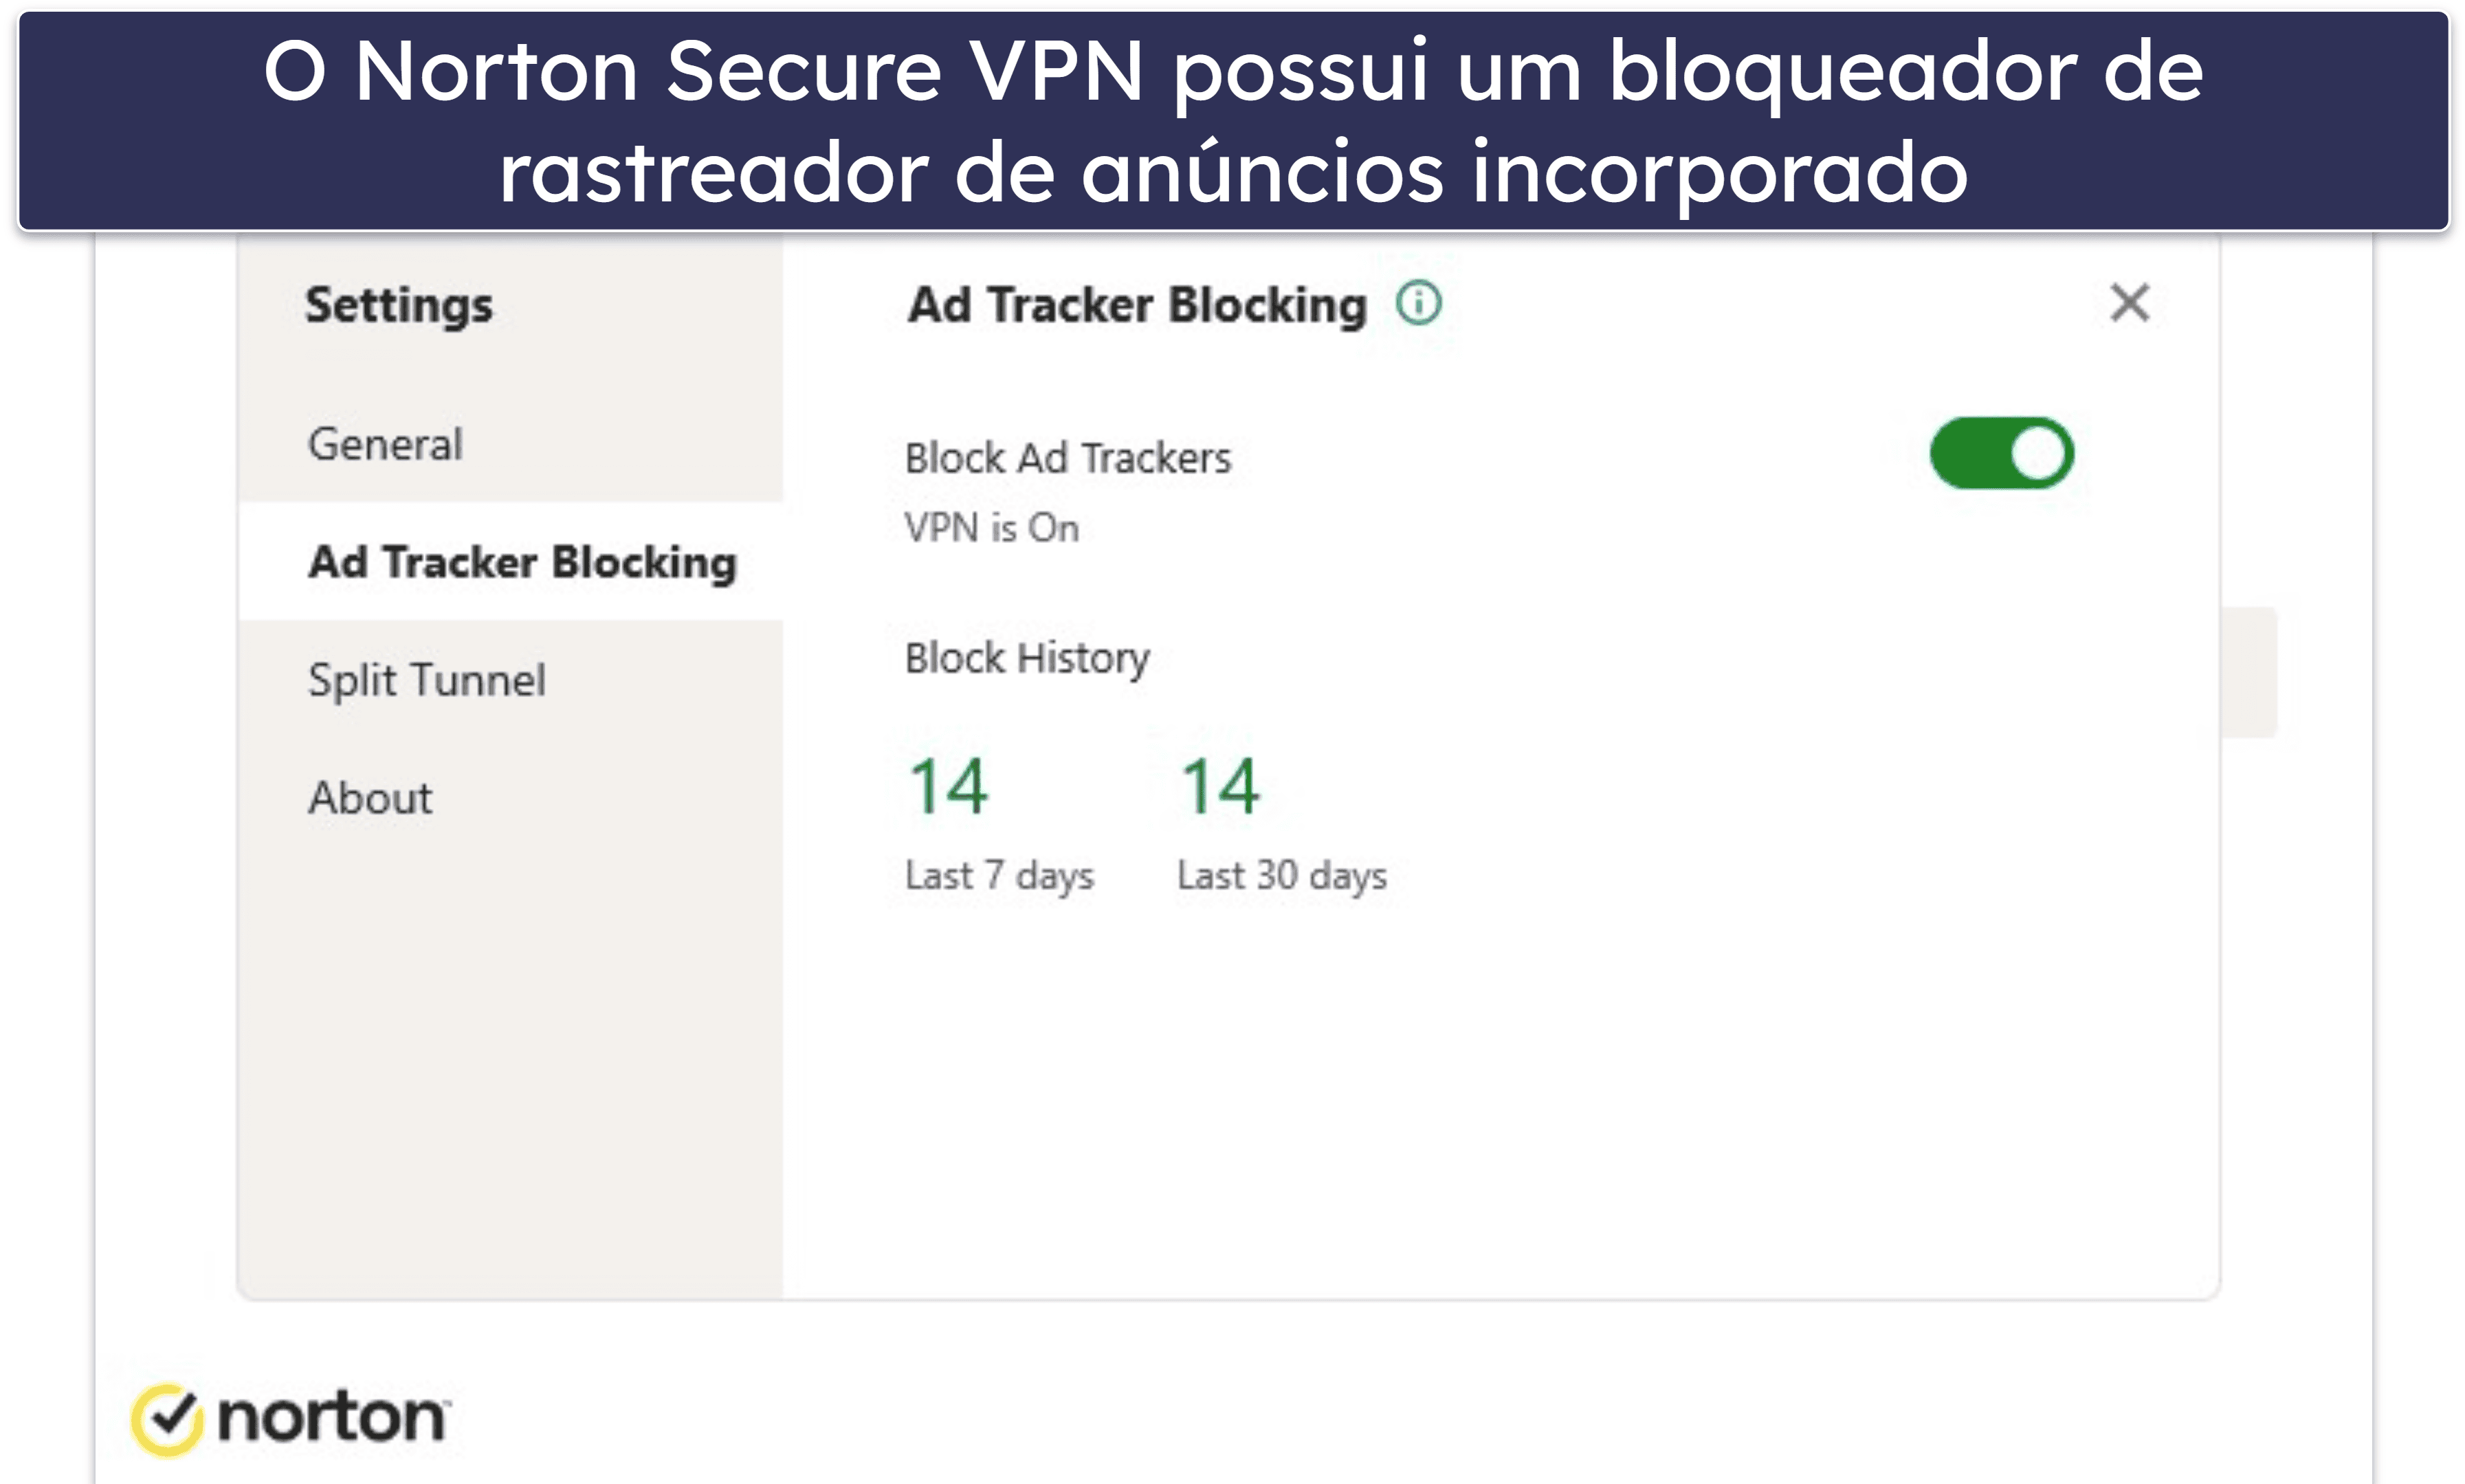 Recursos do Norton Secure VPN